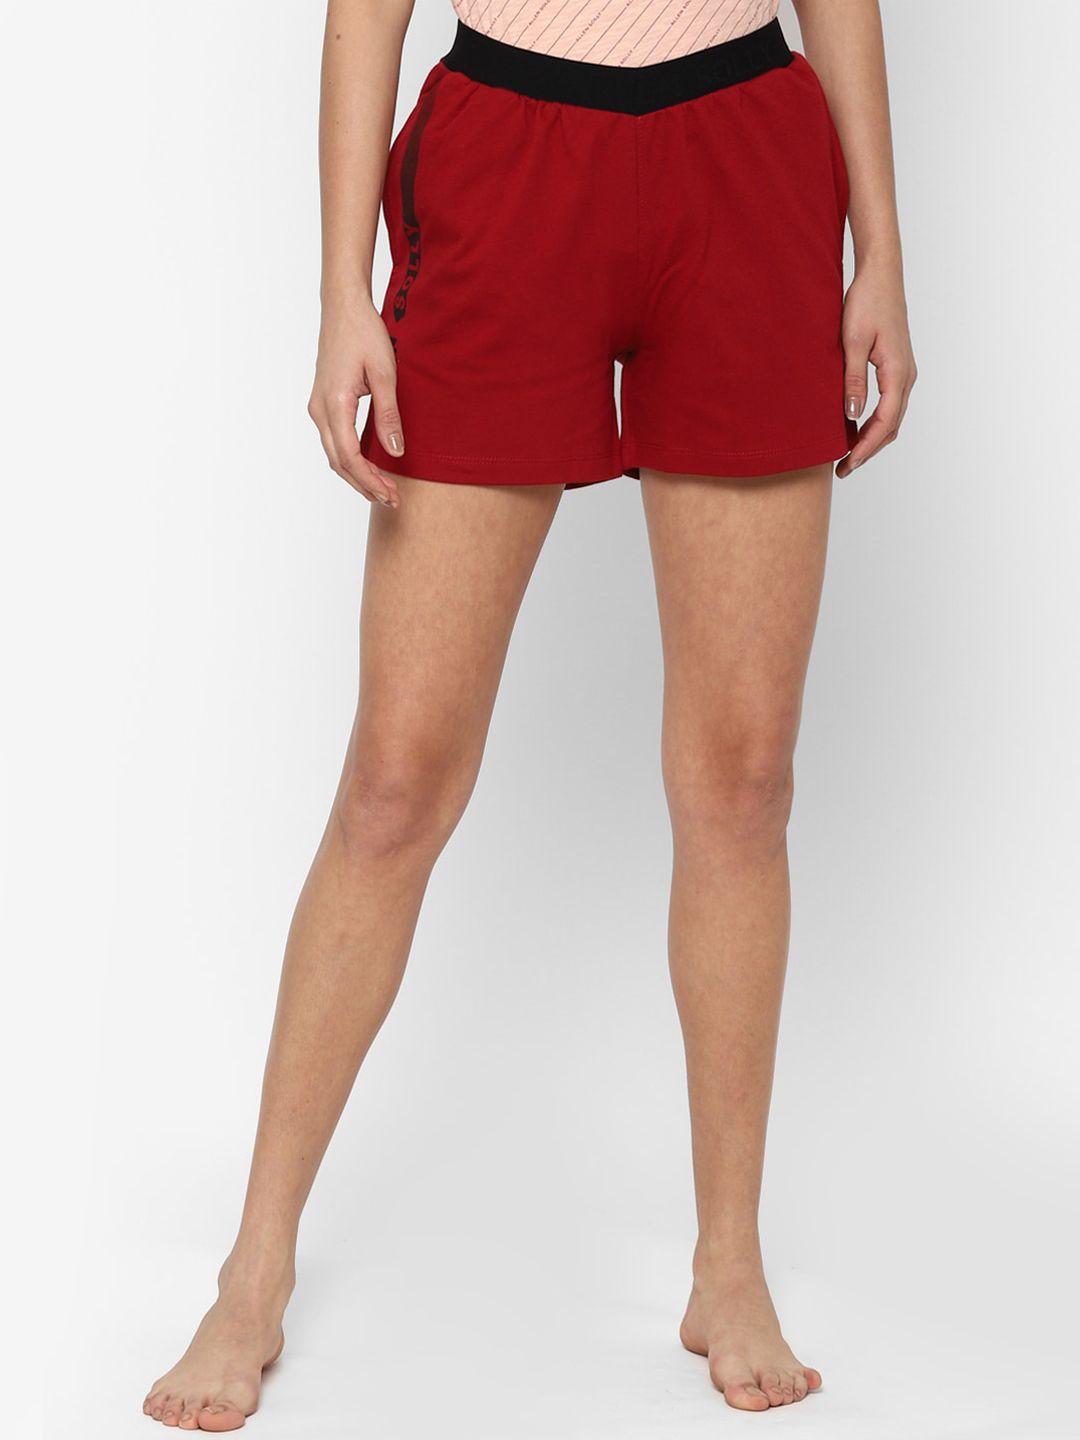 allen solly woman maroon regular shorts